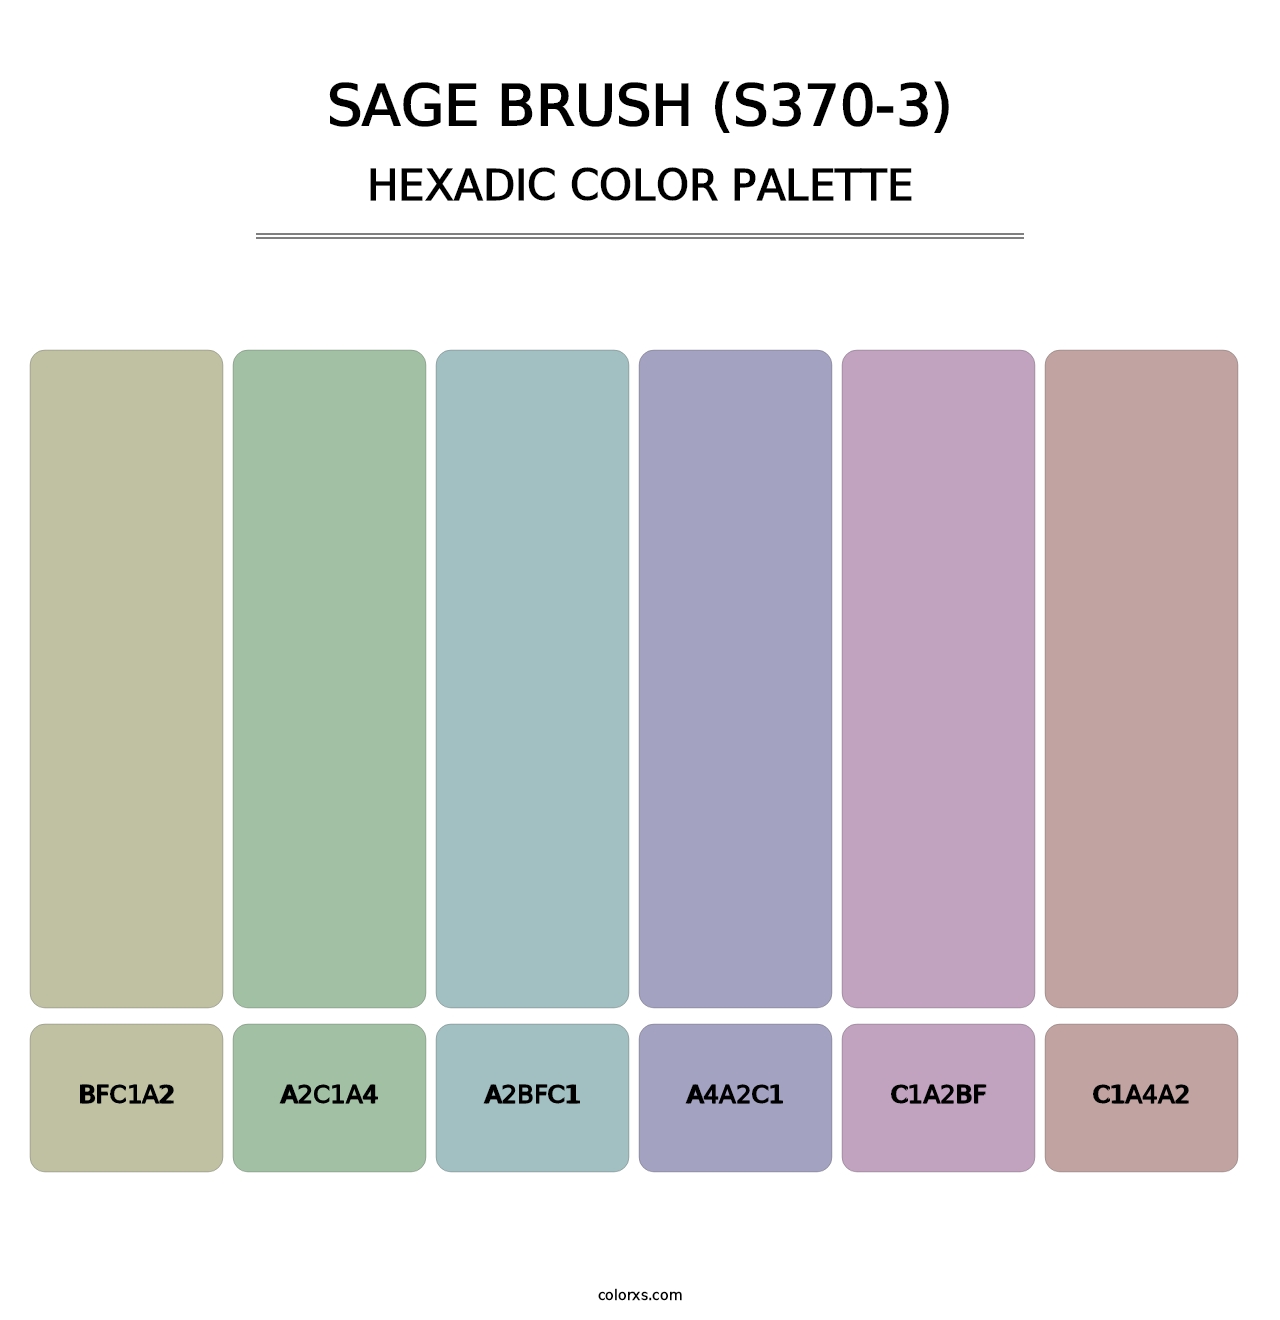 Sage Brush (S370-3) - Hexadic Color Palette